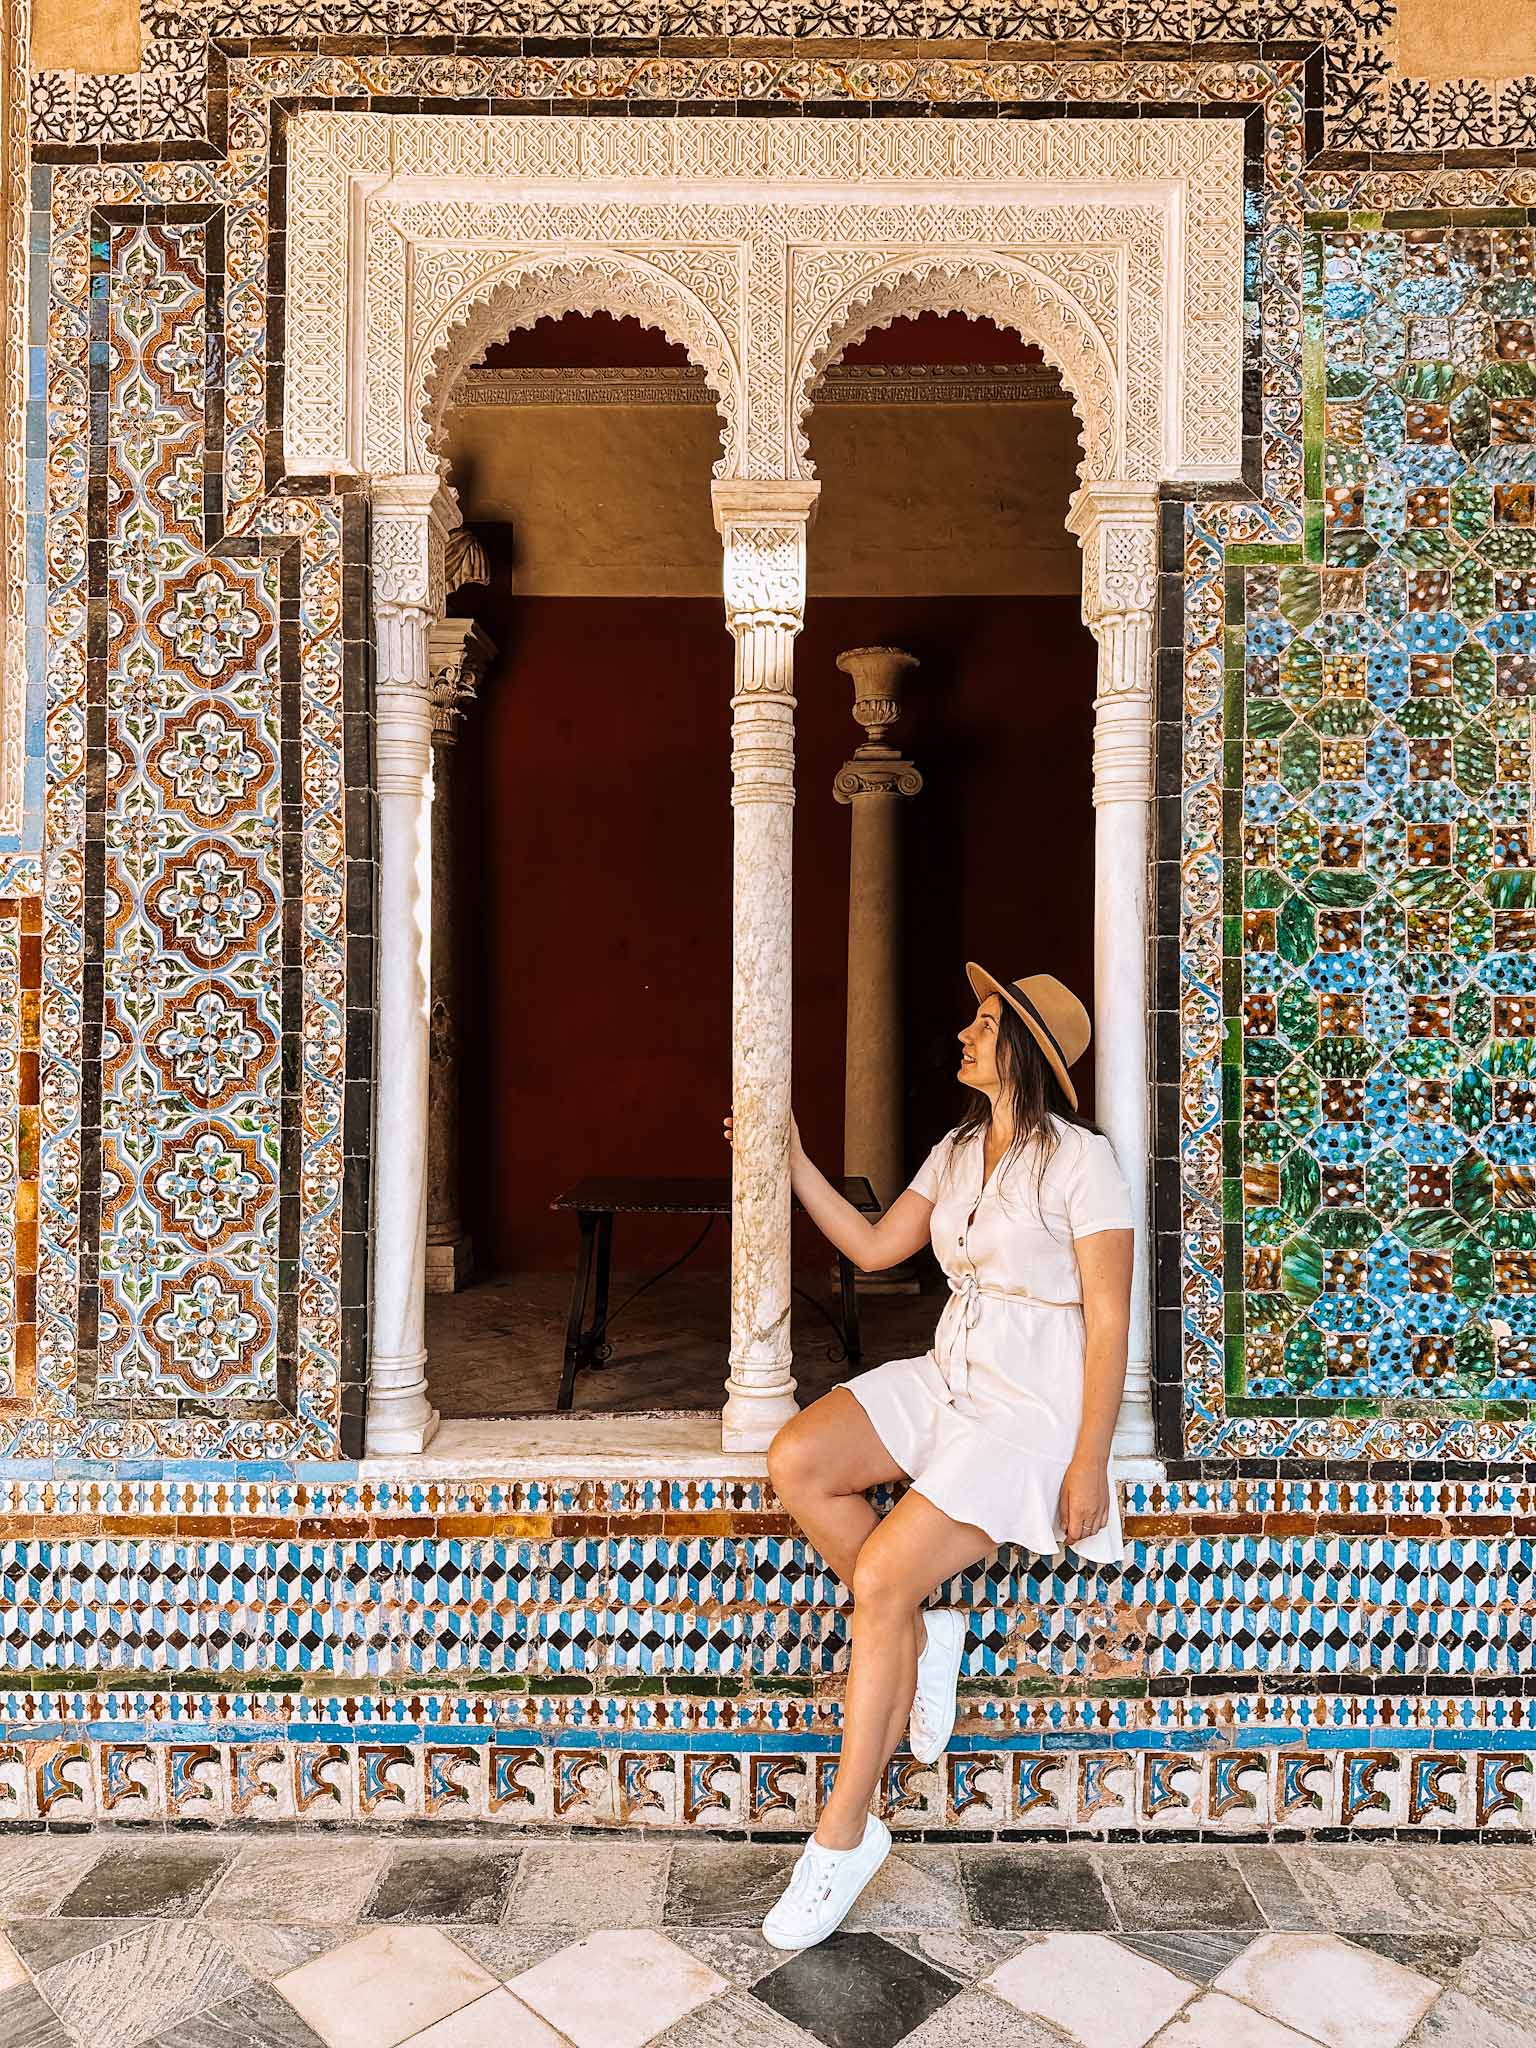 Most fantastic Instagram spots in Seville, Spain